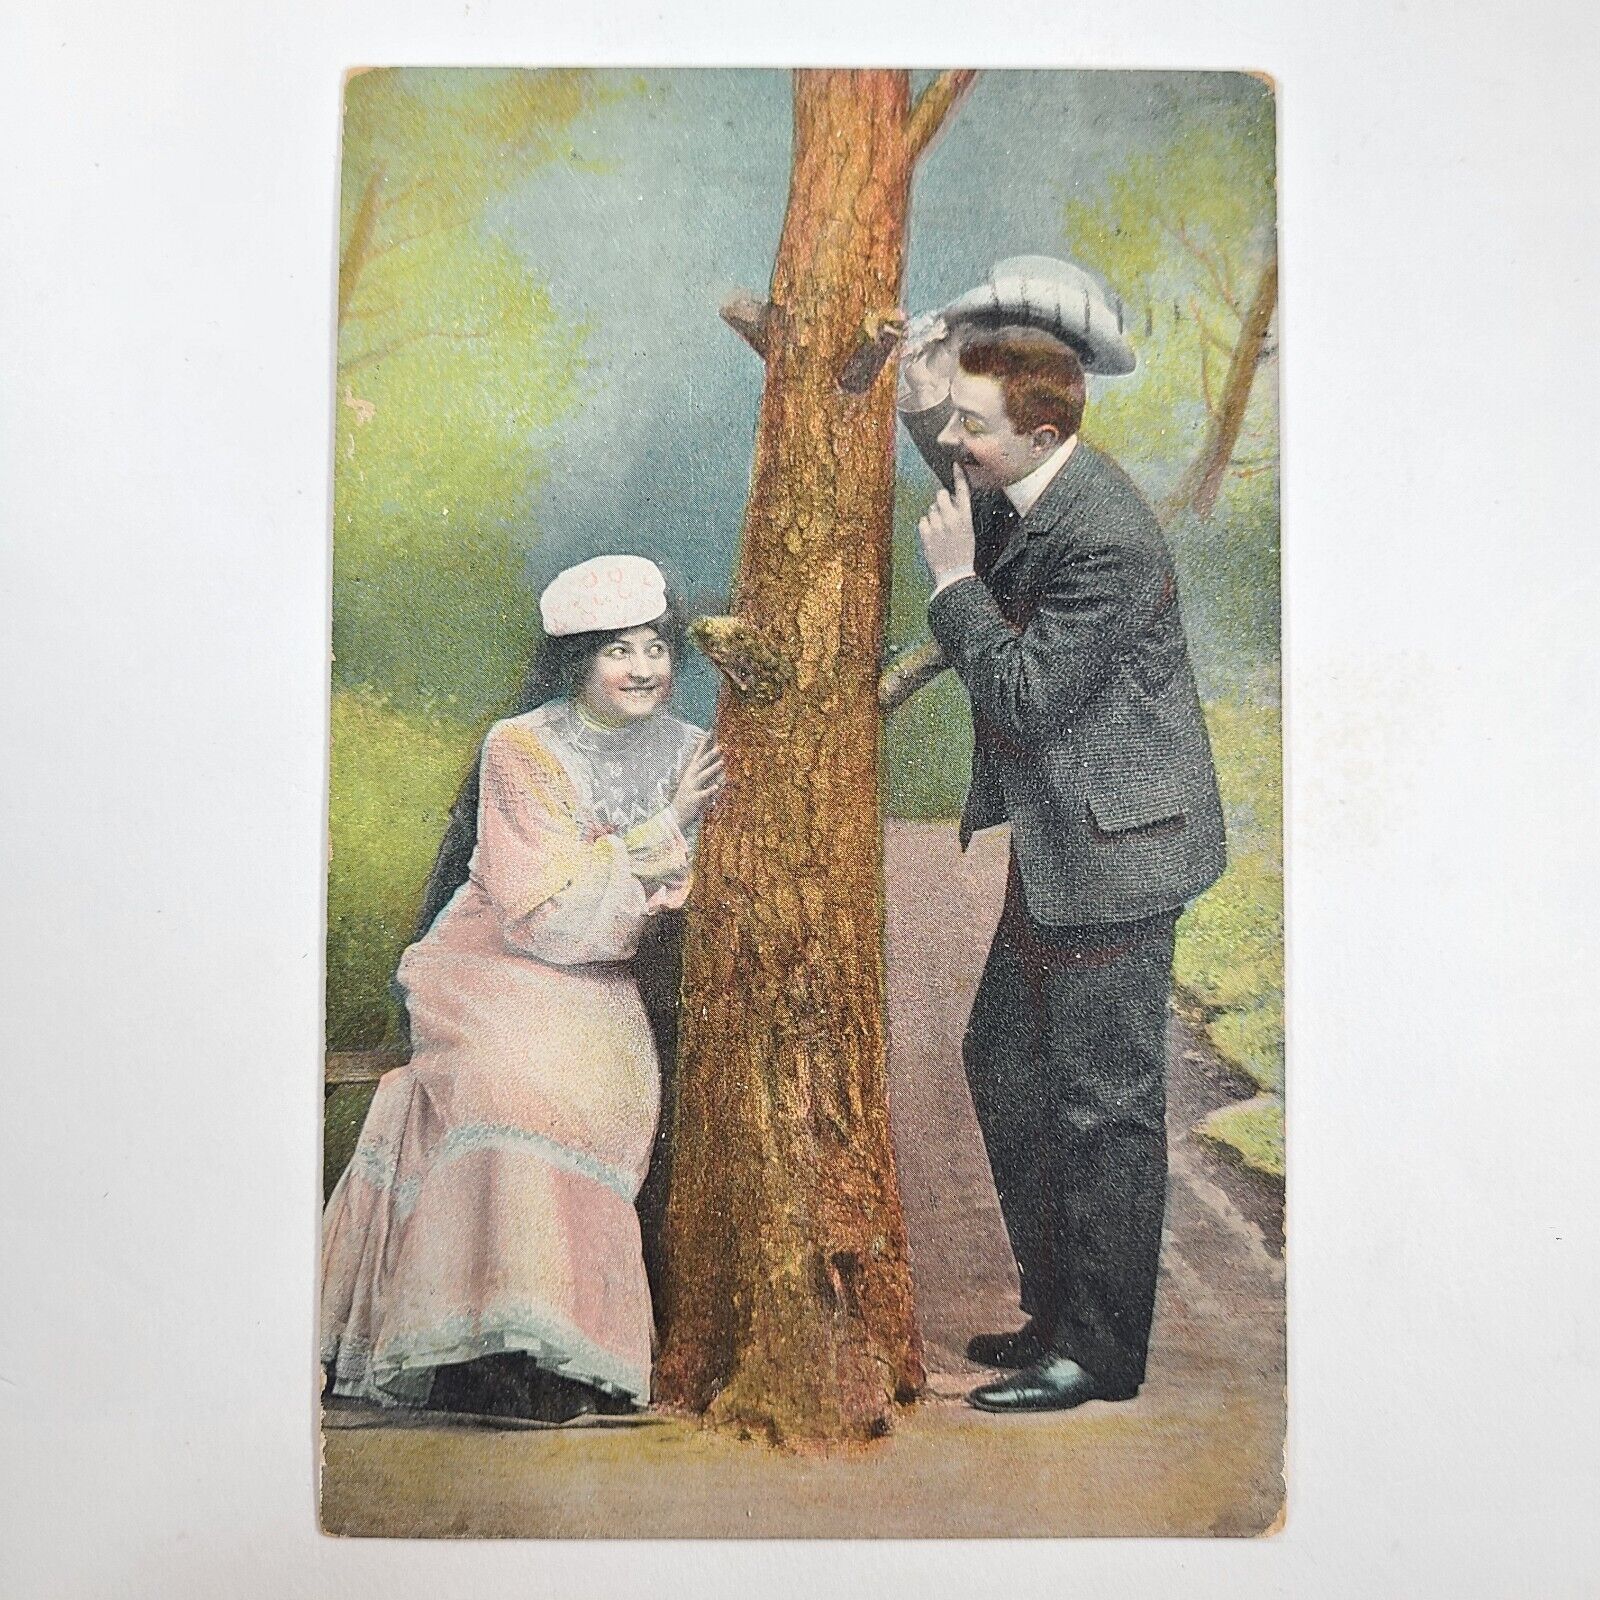 Antique Postcard Romance Hand Tinted Print Hide and Seek Game Love Ephemera 